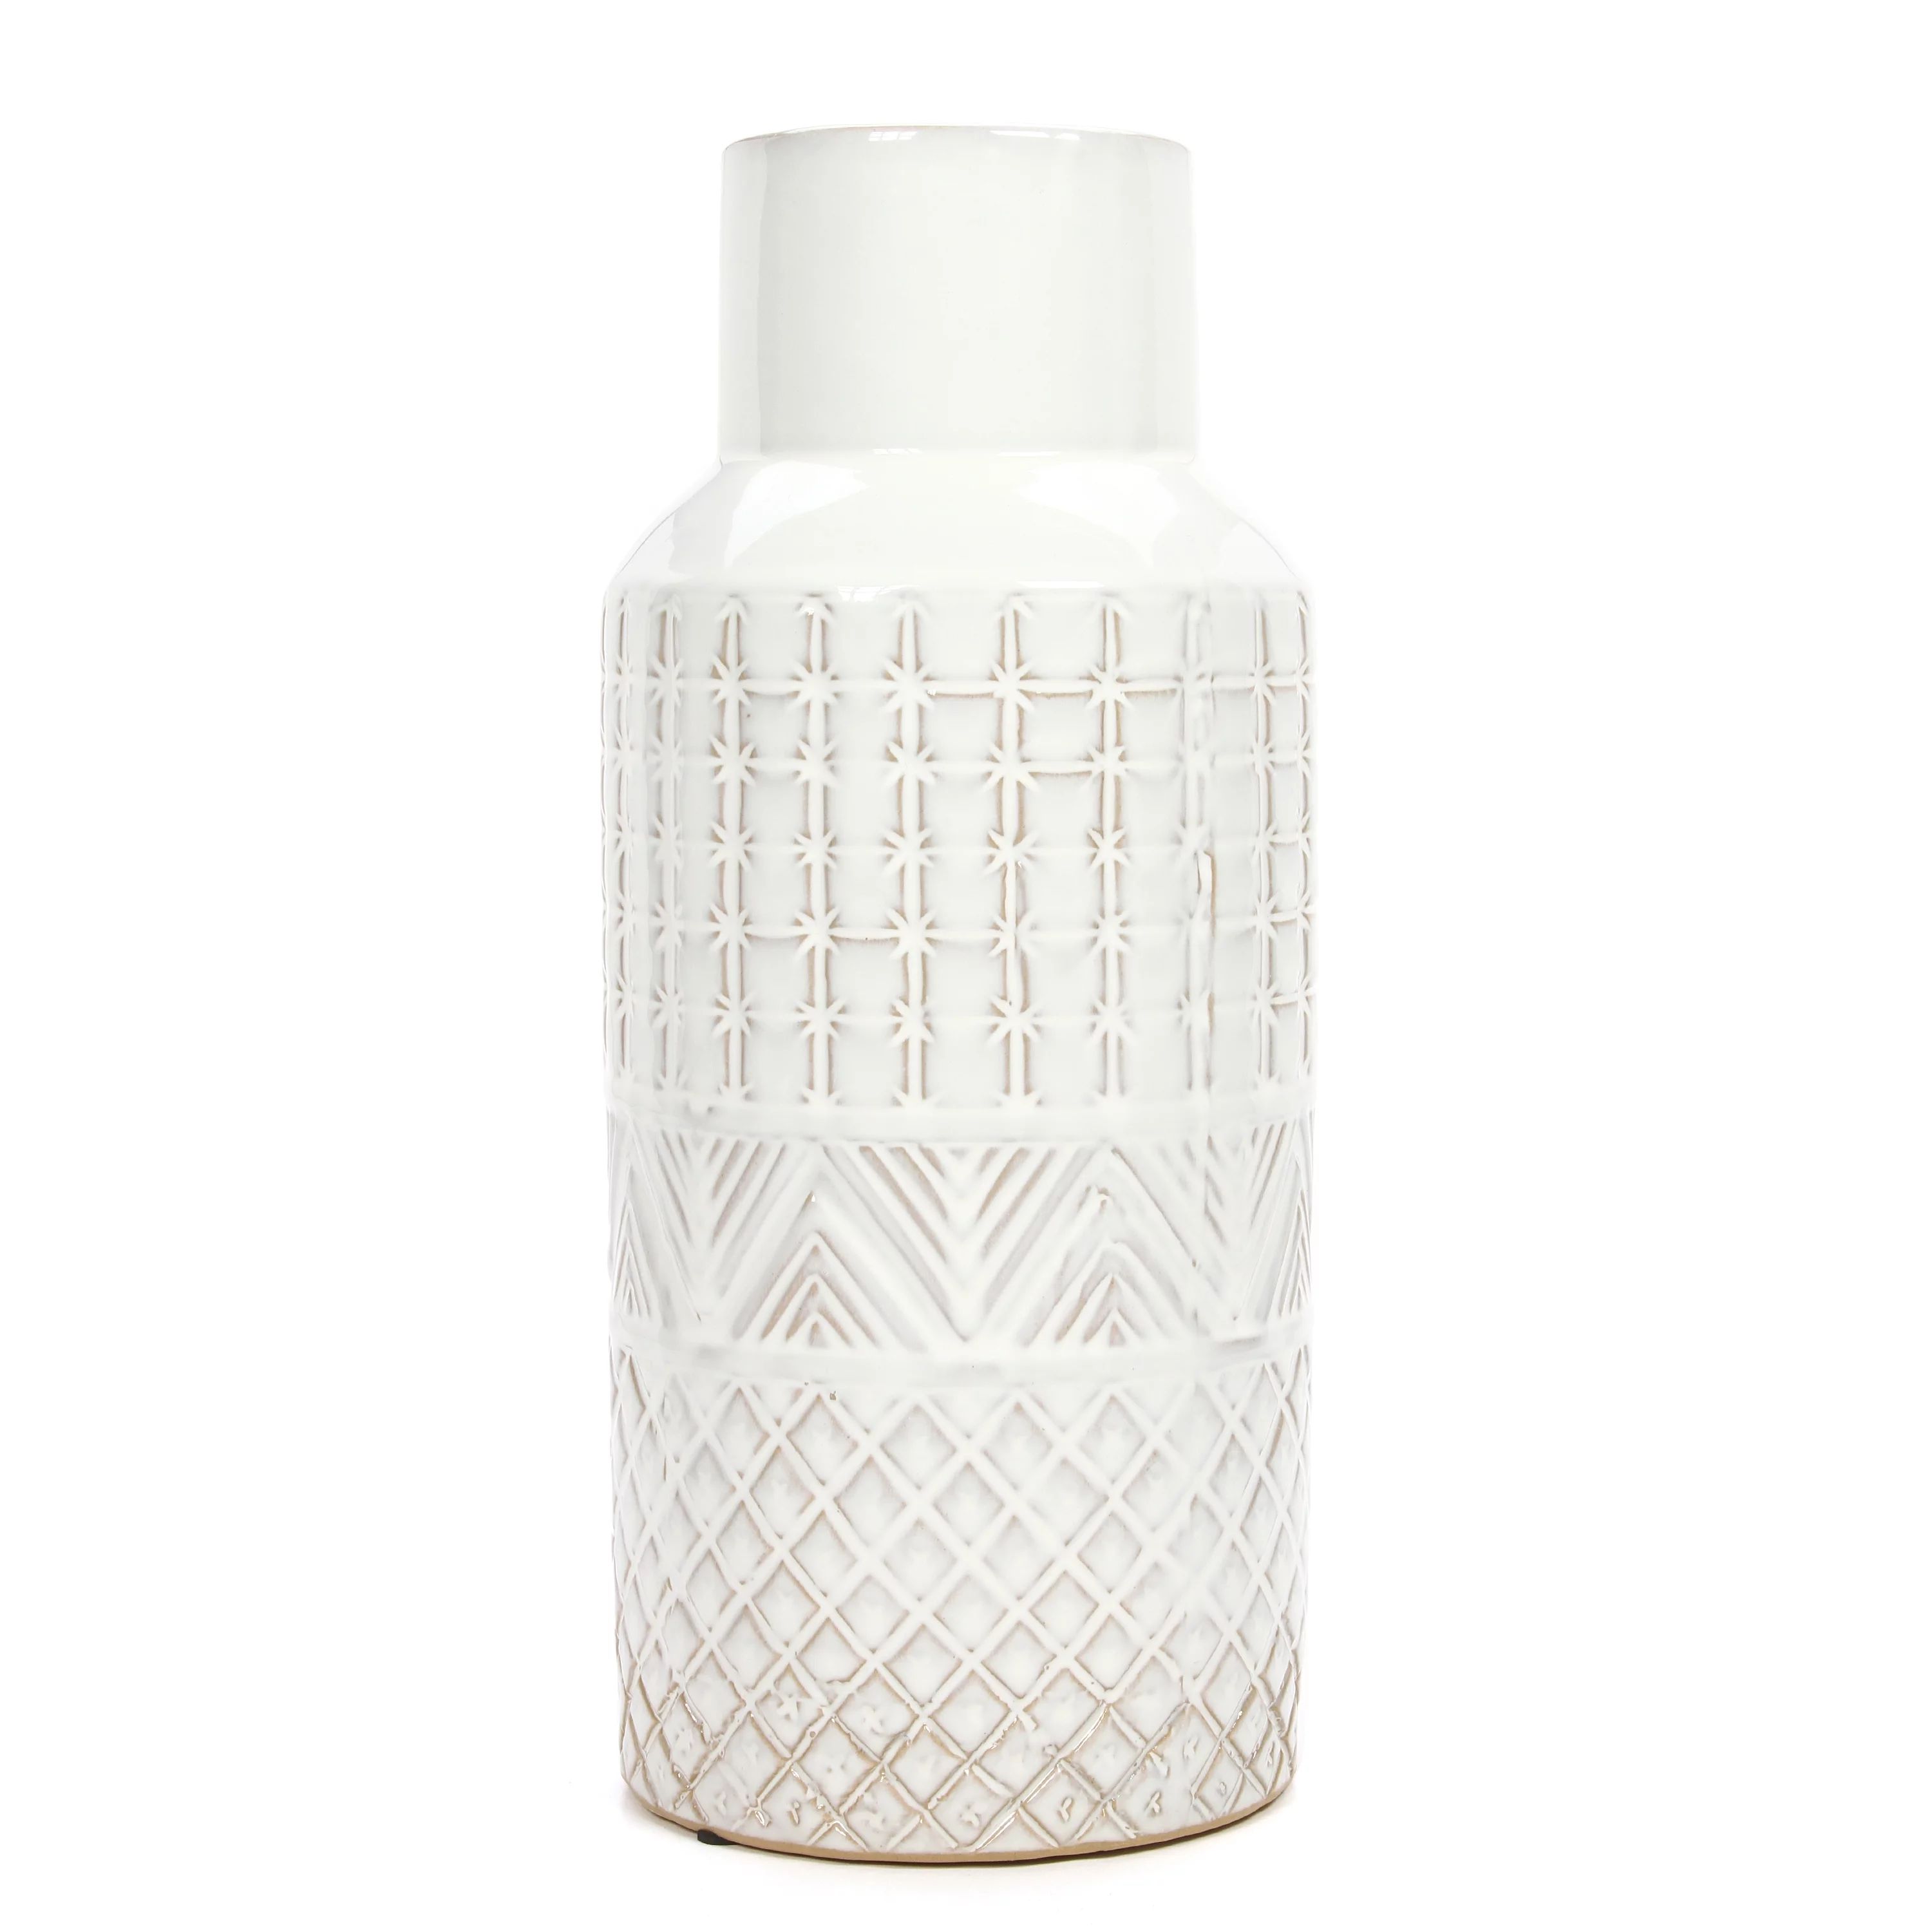 Better Homes and Gardens Large Cream Ceramic Textured Vase | Walmart (US)